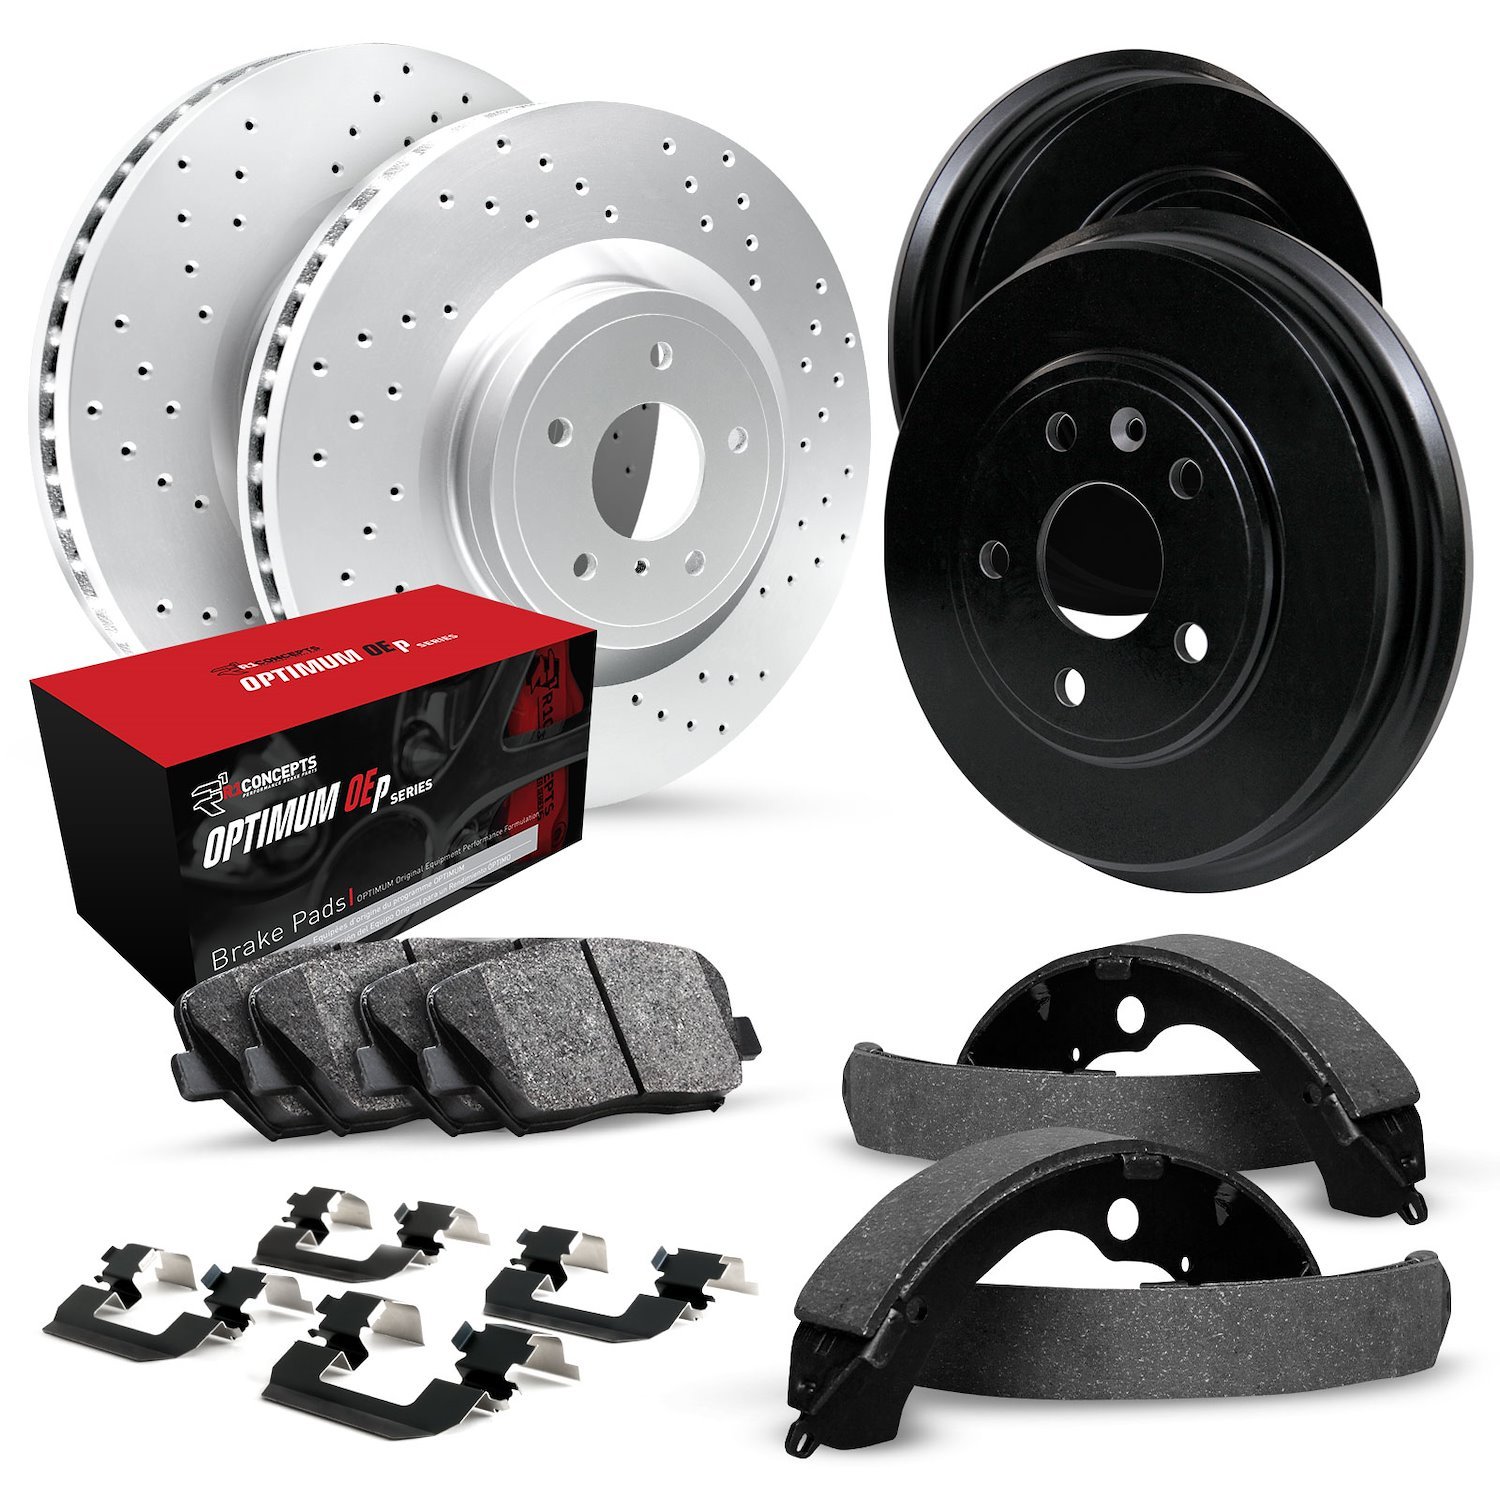 GEO-Carbon Drilled Brake Rotor & Drum Set w/Optimum OE Pads, Shoes, & Hardware, 2013-2015 Infiniti/Nissan